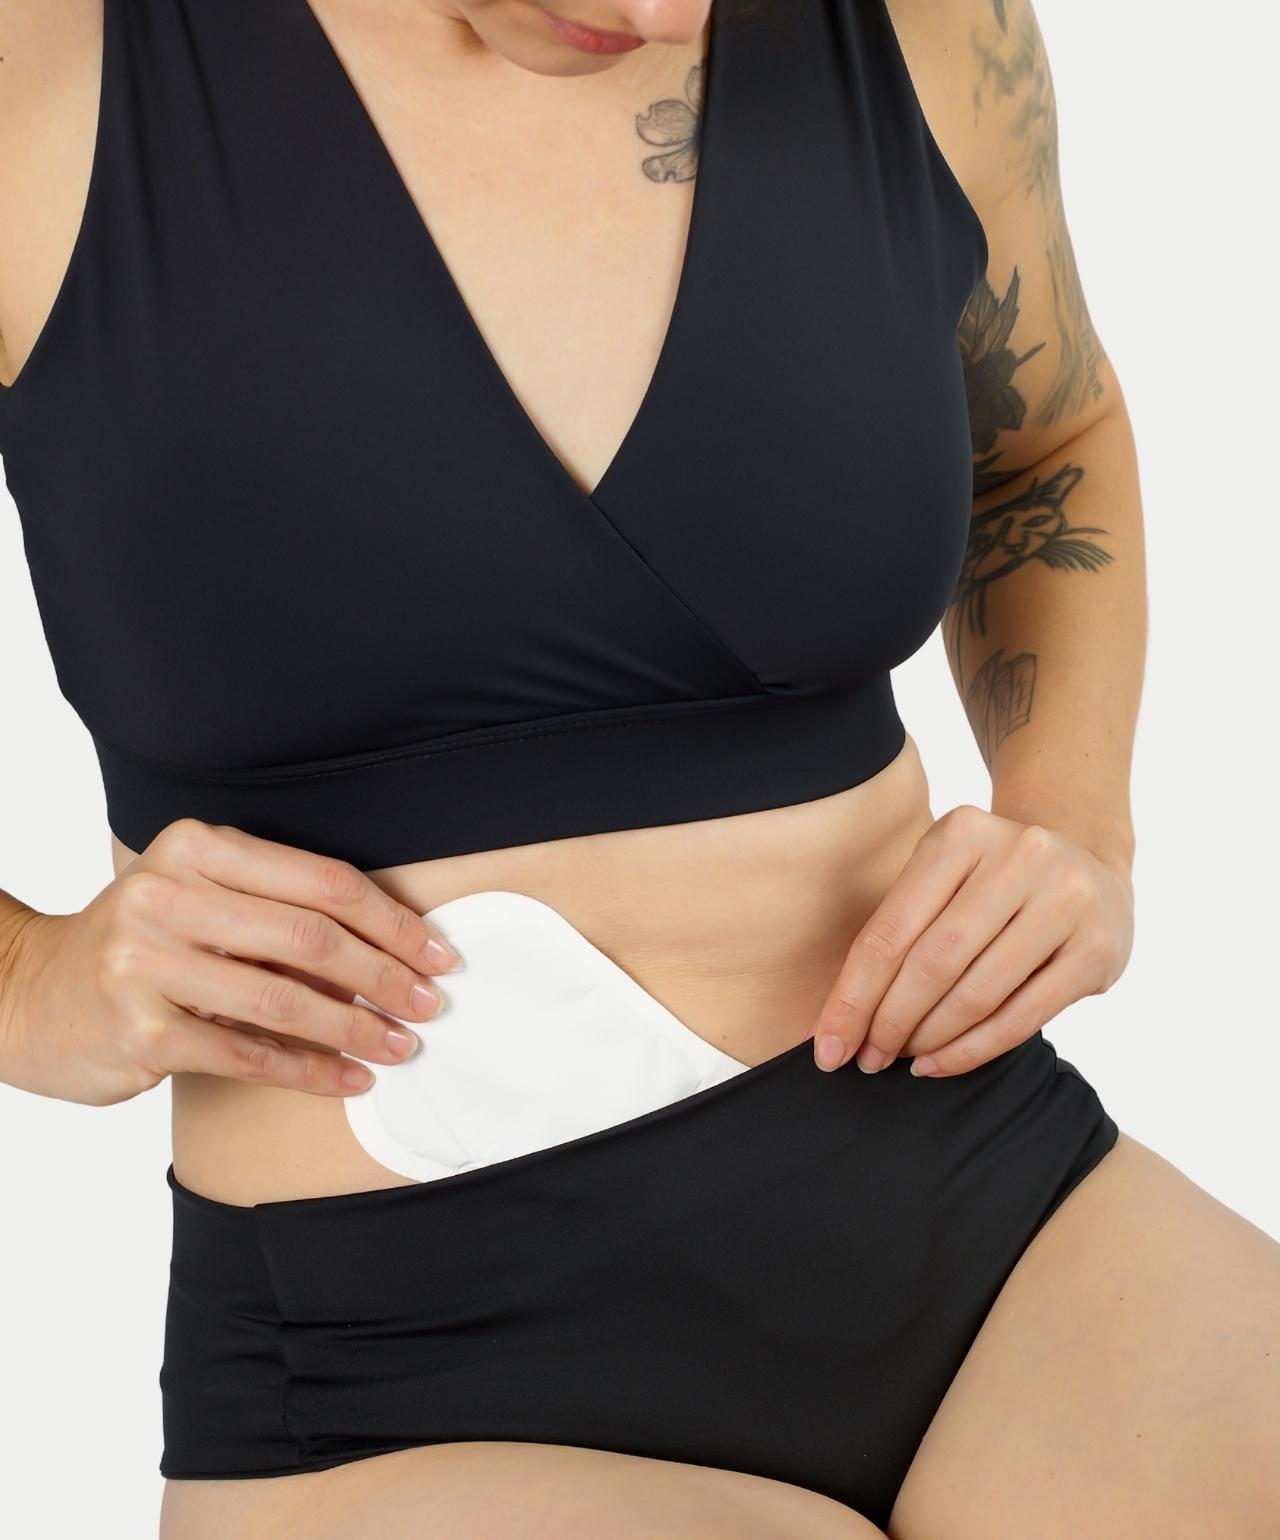 Woman inserting Nyssa On-The-Go Heat Press into VieWear Underwear